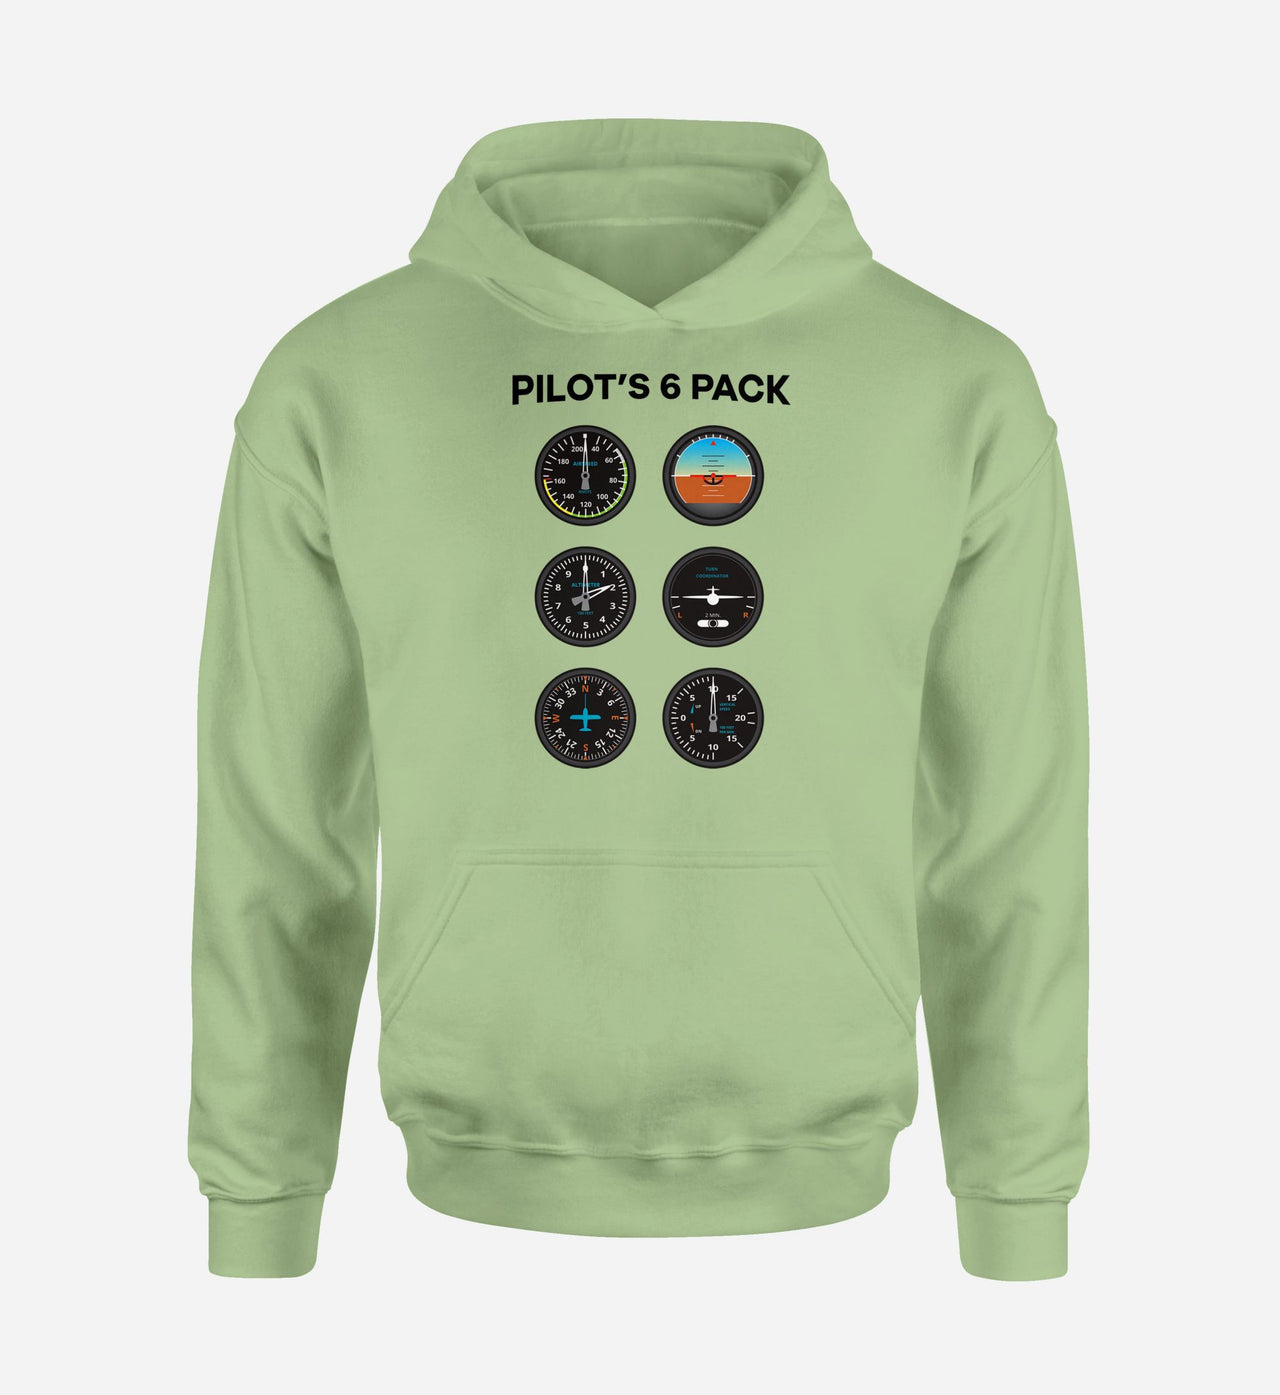 Pilot's 6 Pack Designed Hoodies